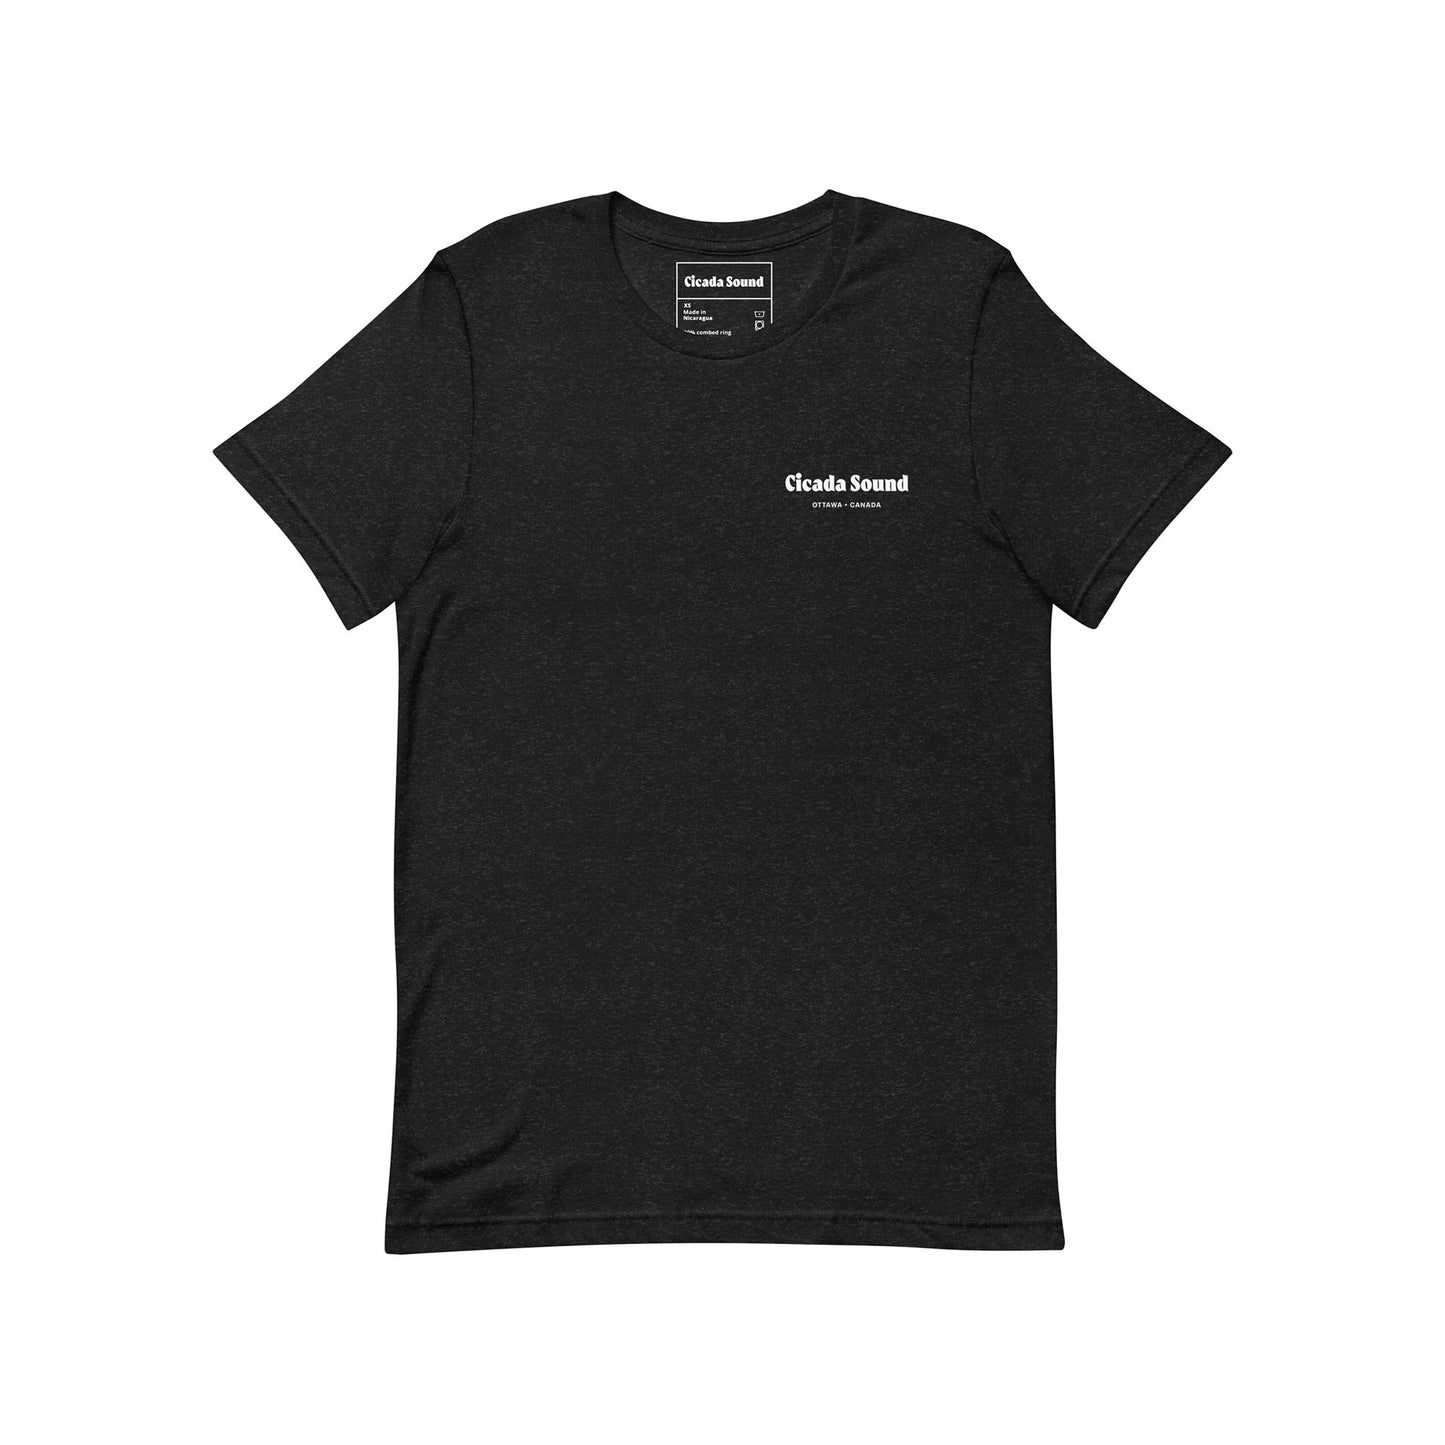 Cicada Sound Standard T-Shirt